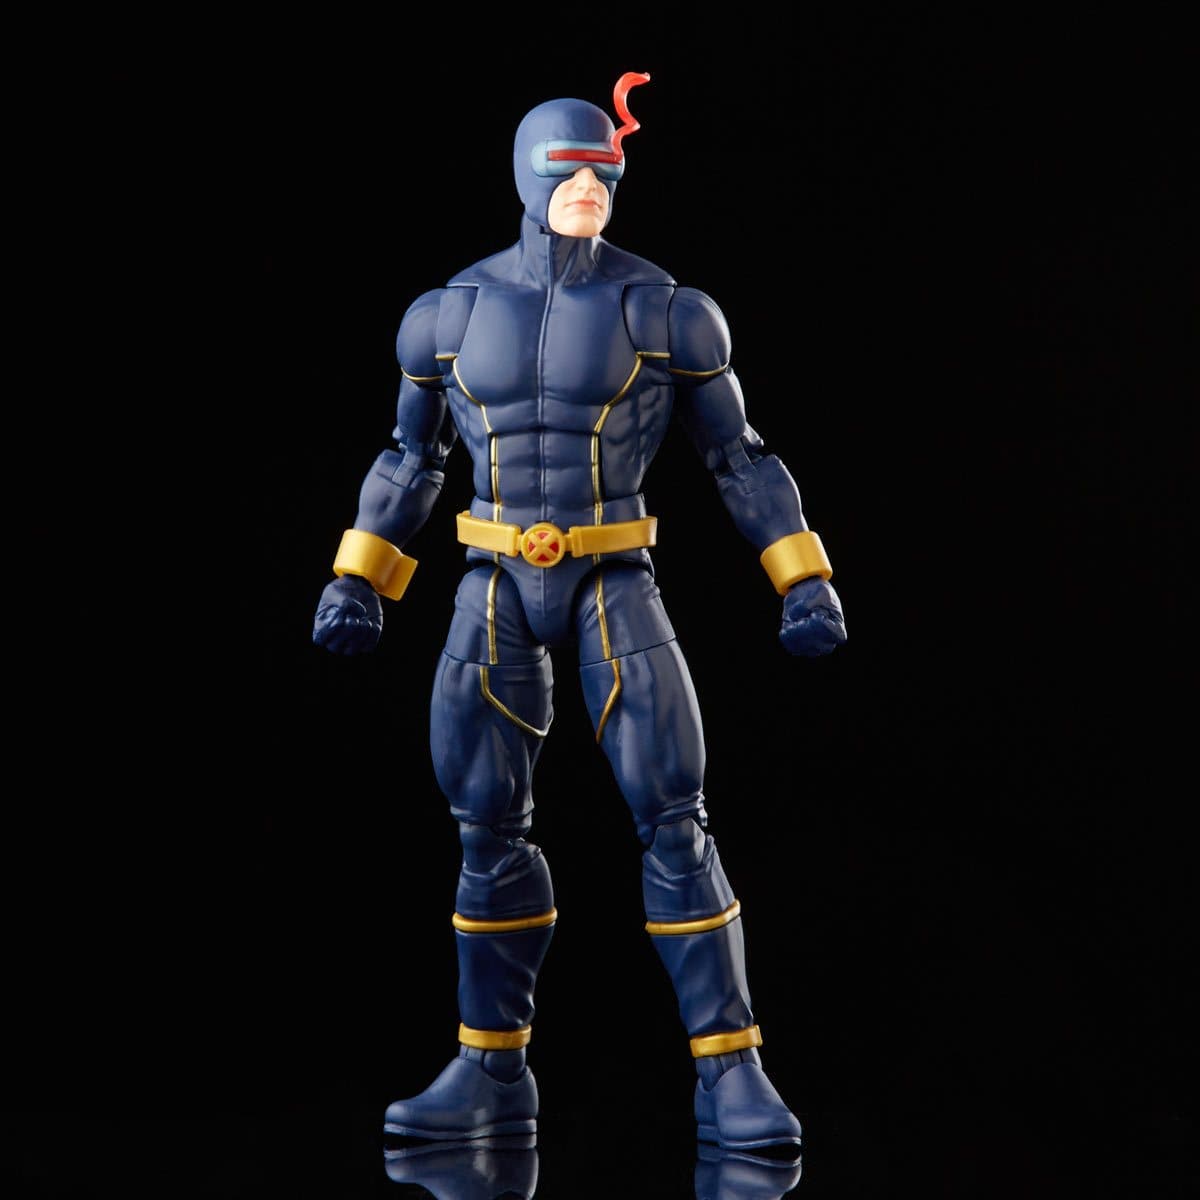 Hasbro Marvel Legends Series X-Men Set of 7 Action Figures (Ch'od Build-A-Figure)